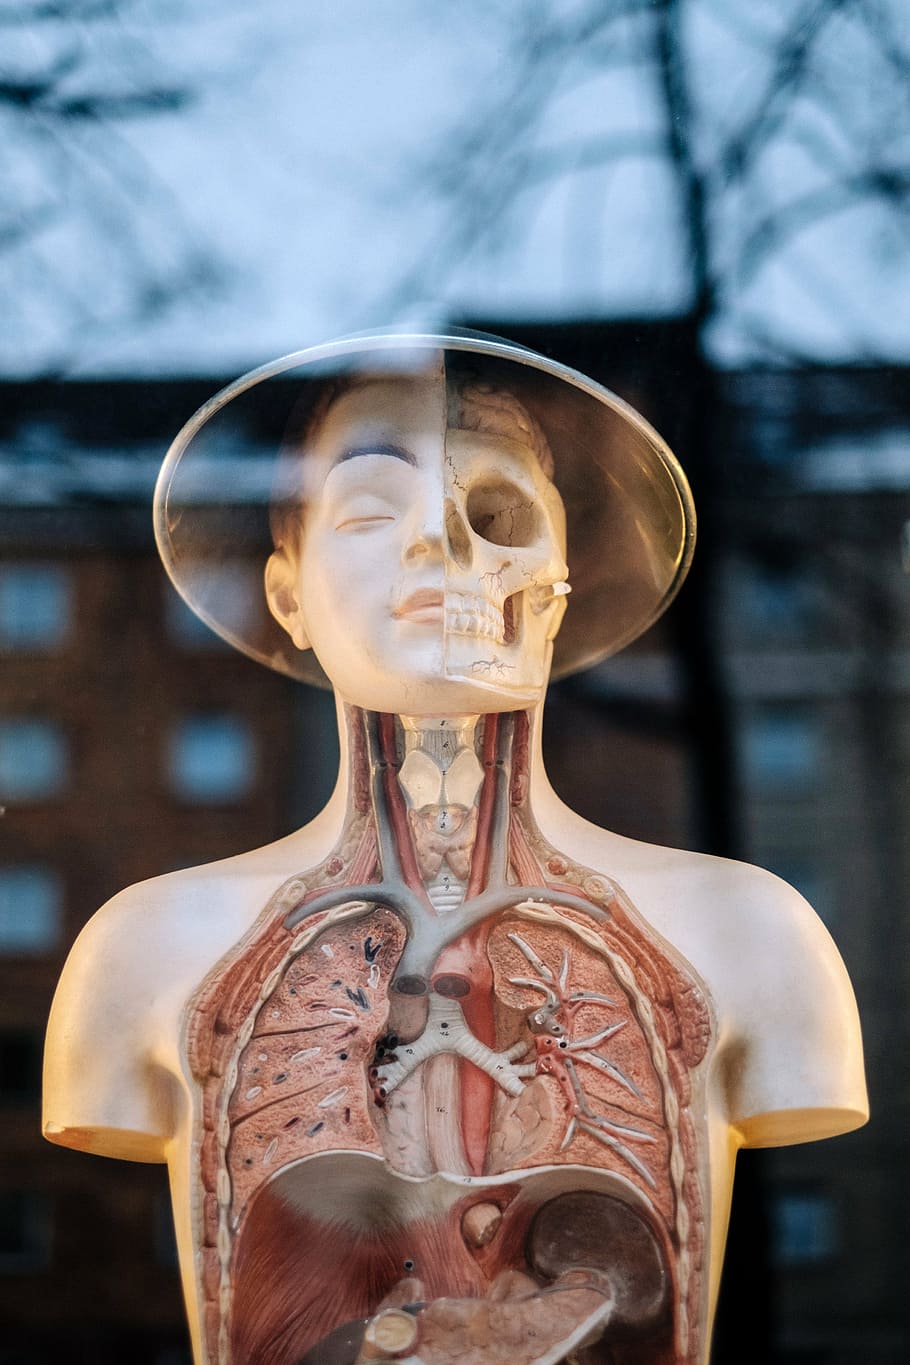 manekin anatomi manusia, manusia, anatomi, model, tubuh bagian atas, struktur, medis, organ, kerangka, bahu